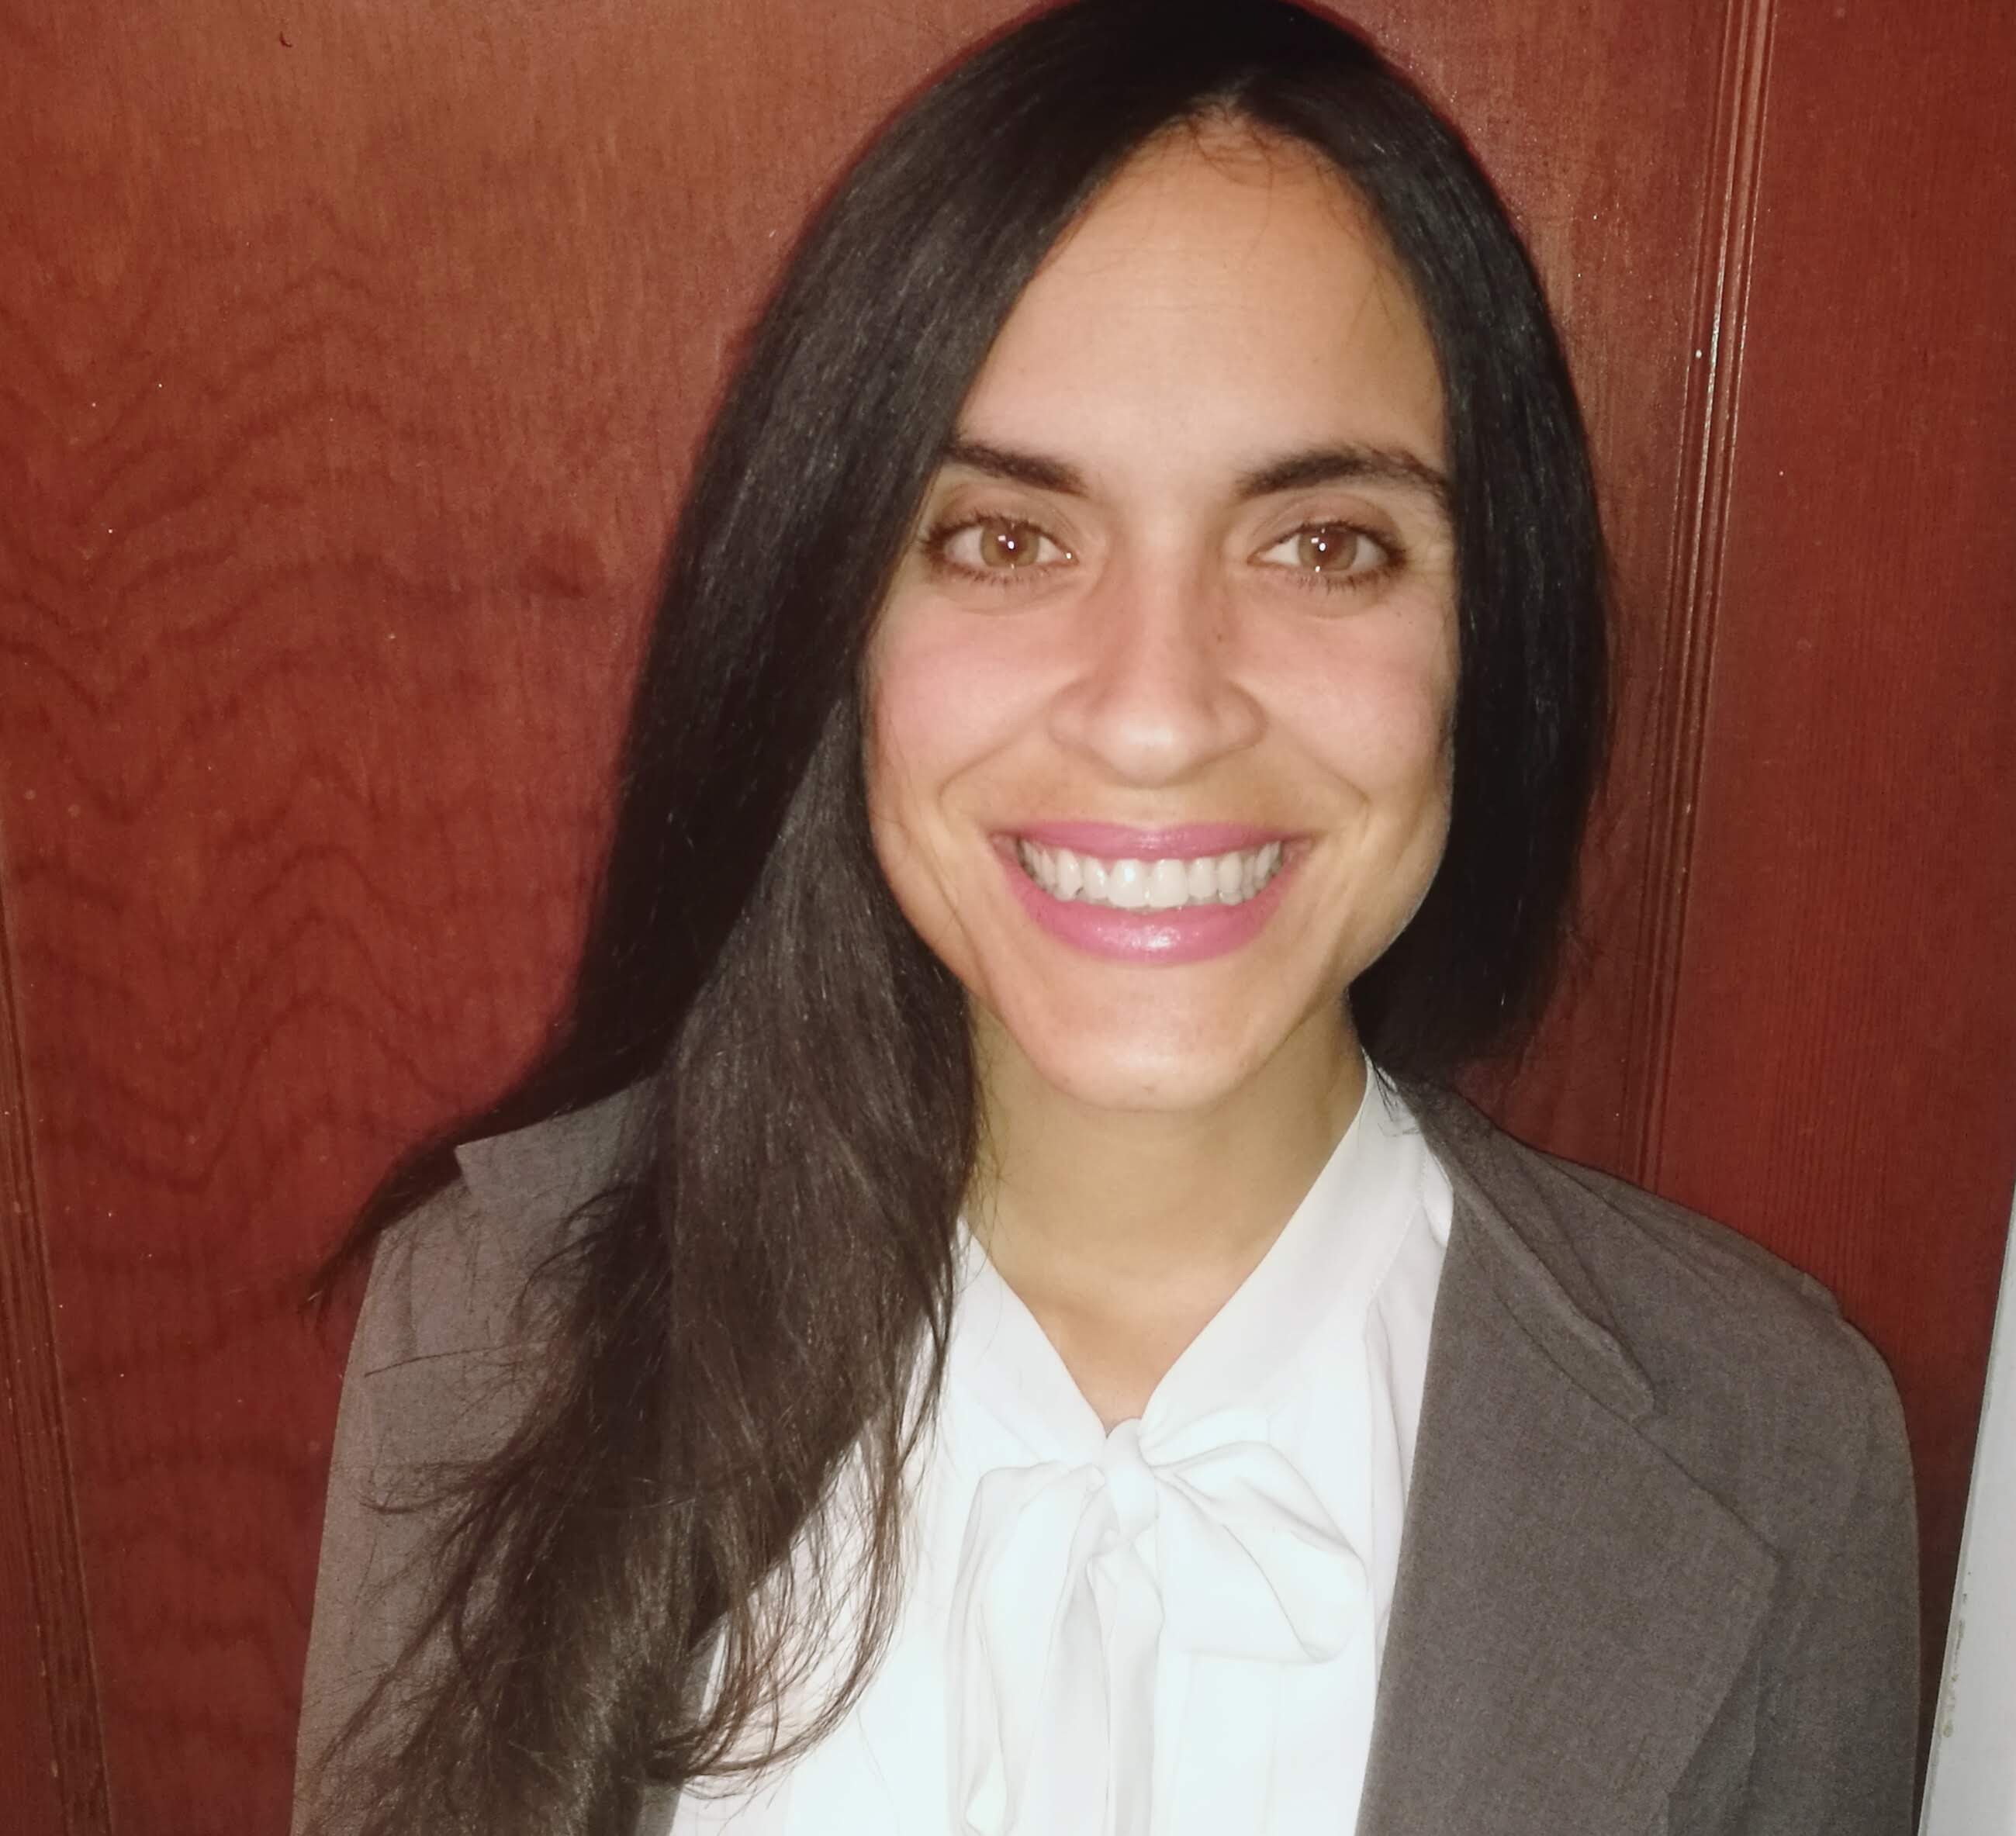 LSU Department of Environmental Sciences Assistant Professor Rebeca de Jesus Crespo